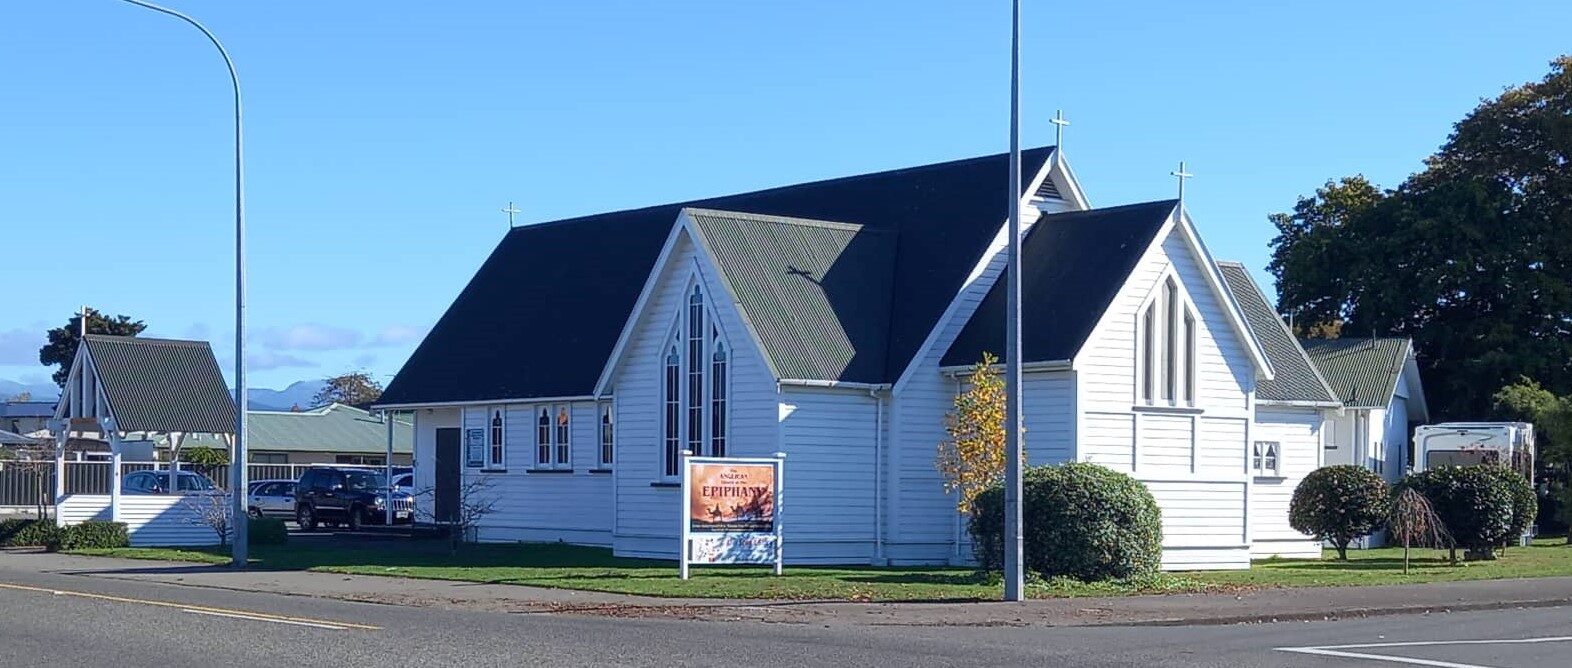 Anglican Church of the Epiphany, Masterton South